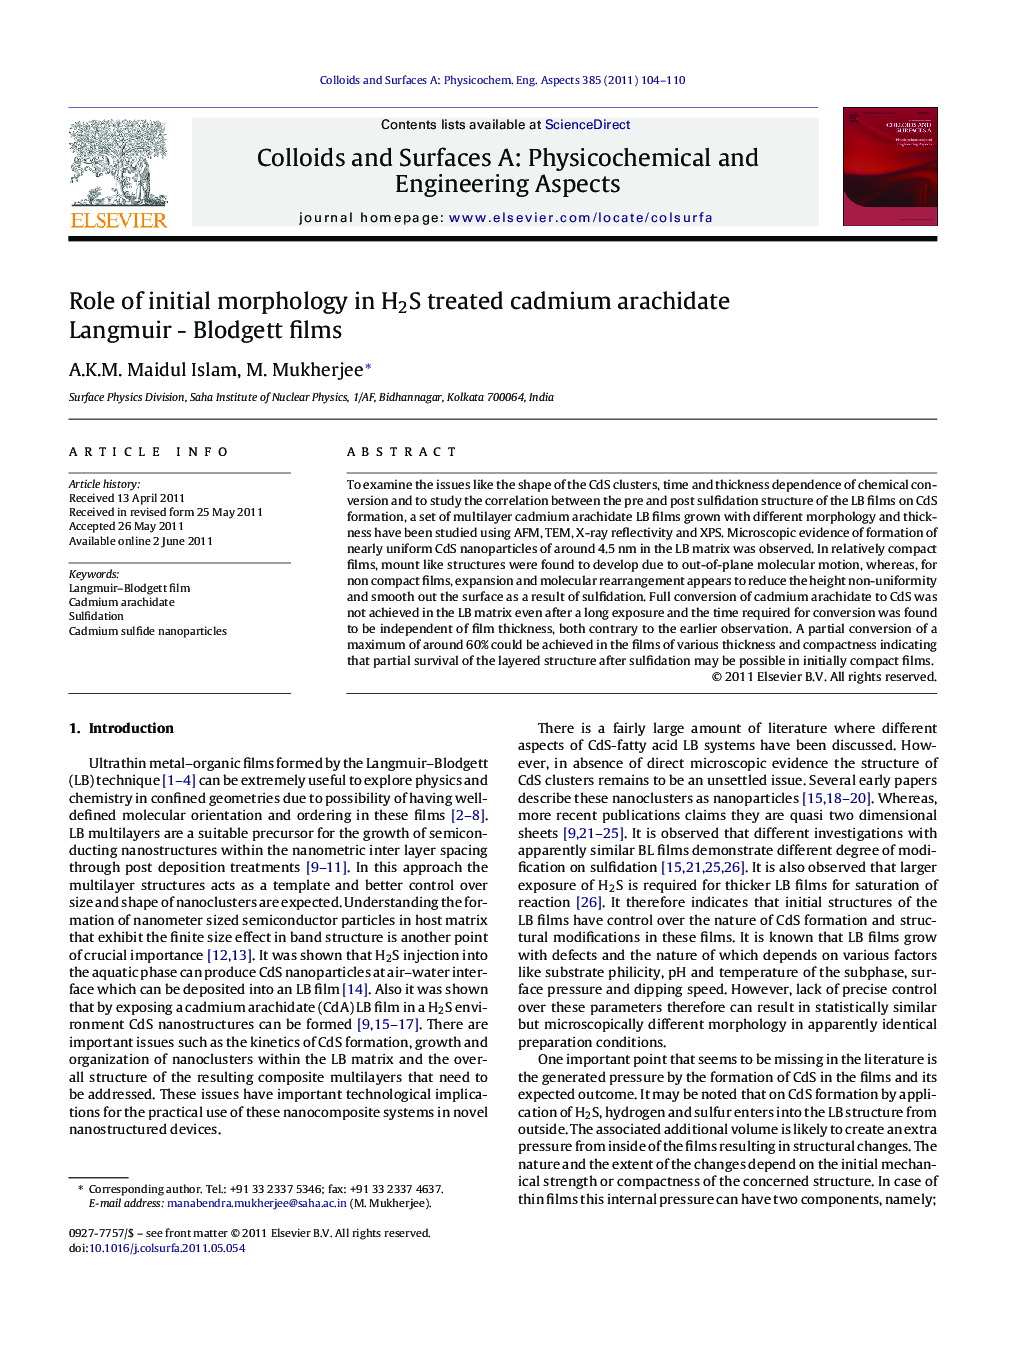 Role of initial morphology in H2S treated cadmium arachidate Langmuir - Blodgett films